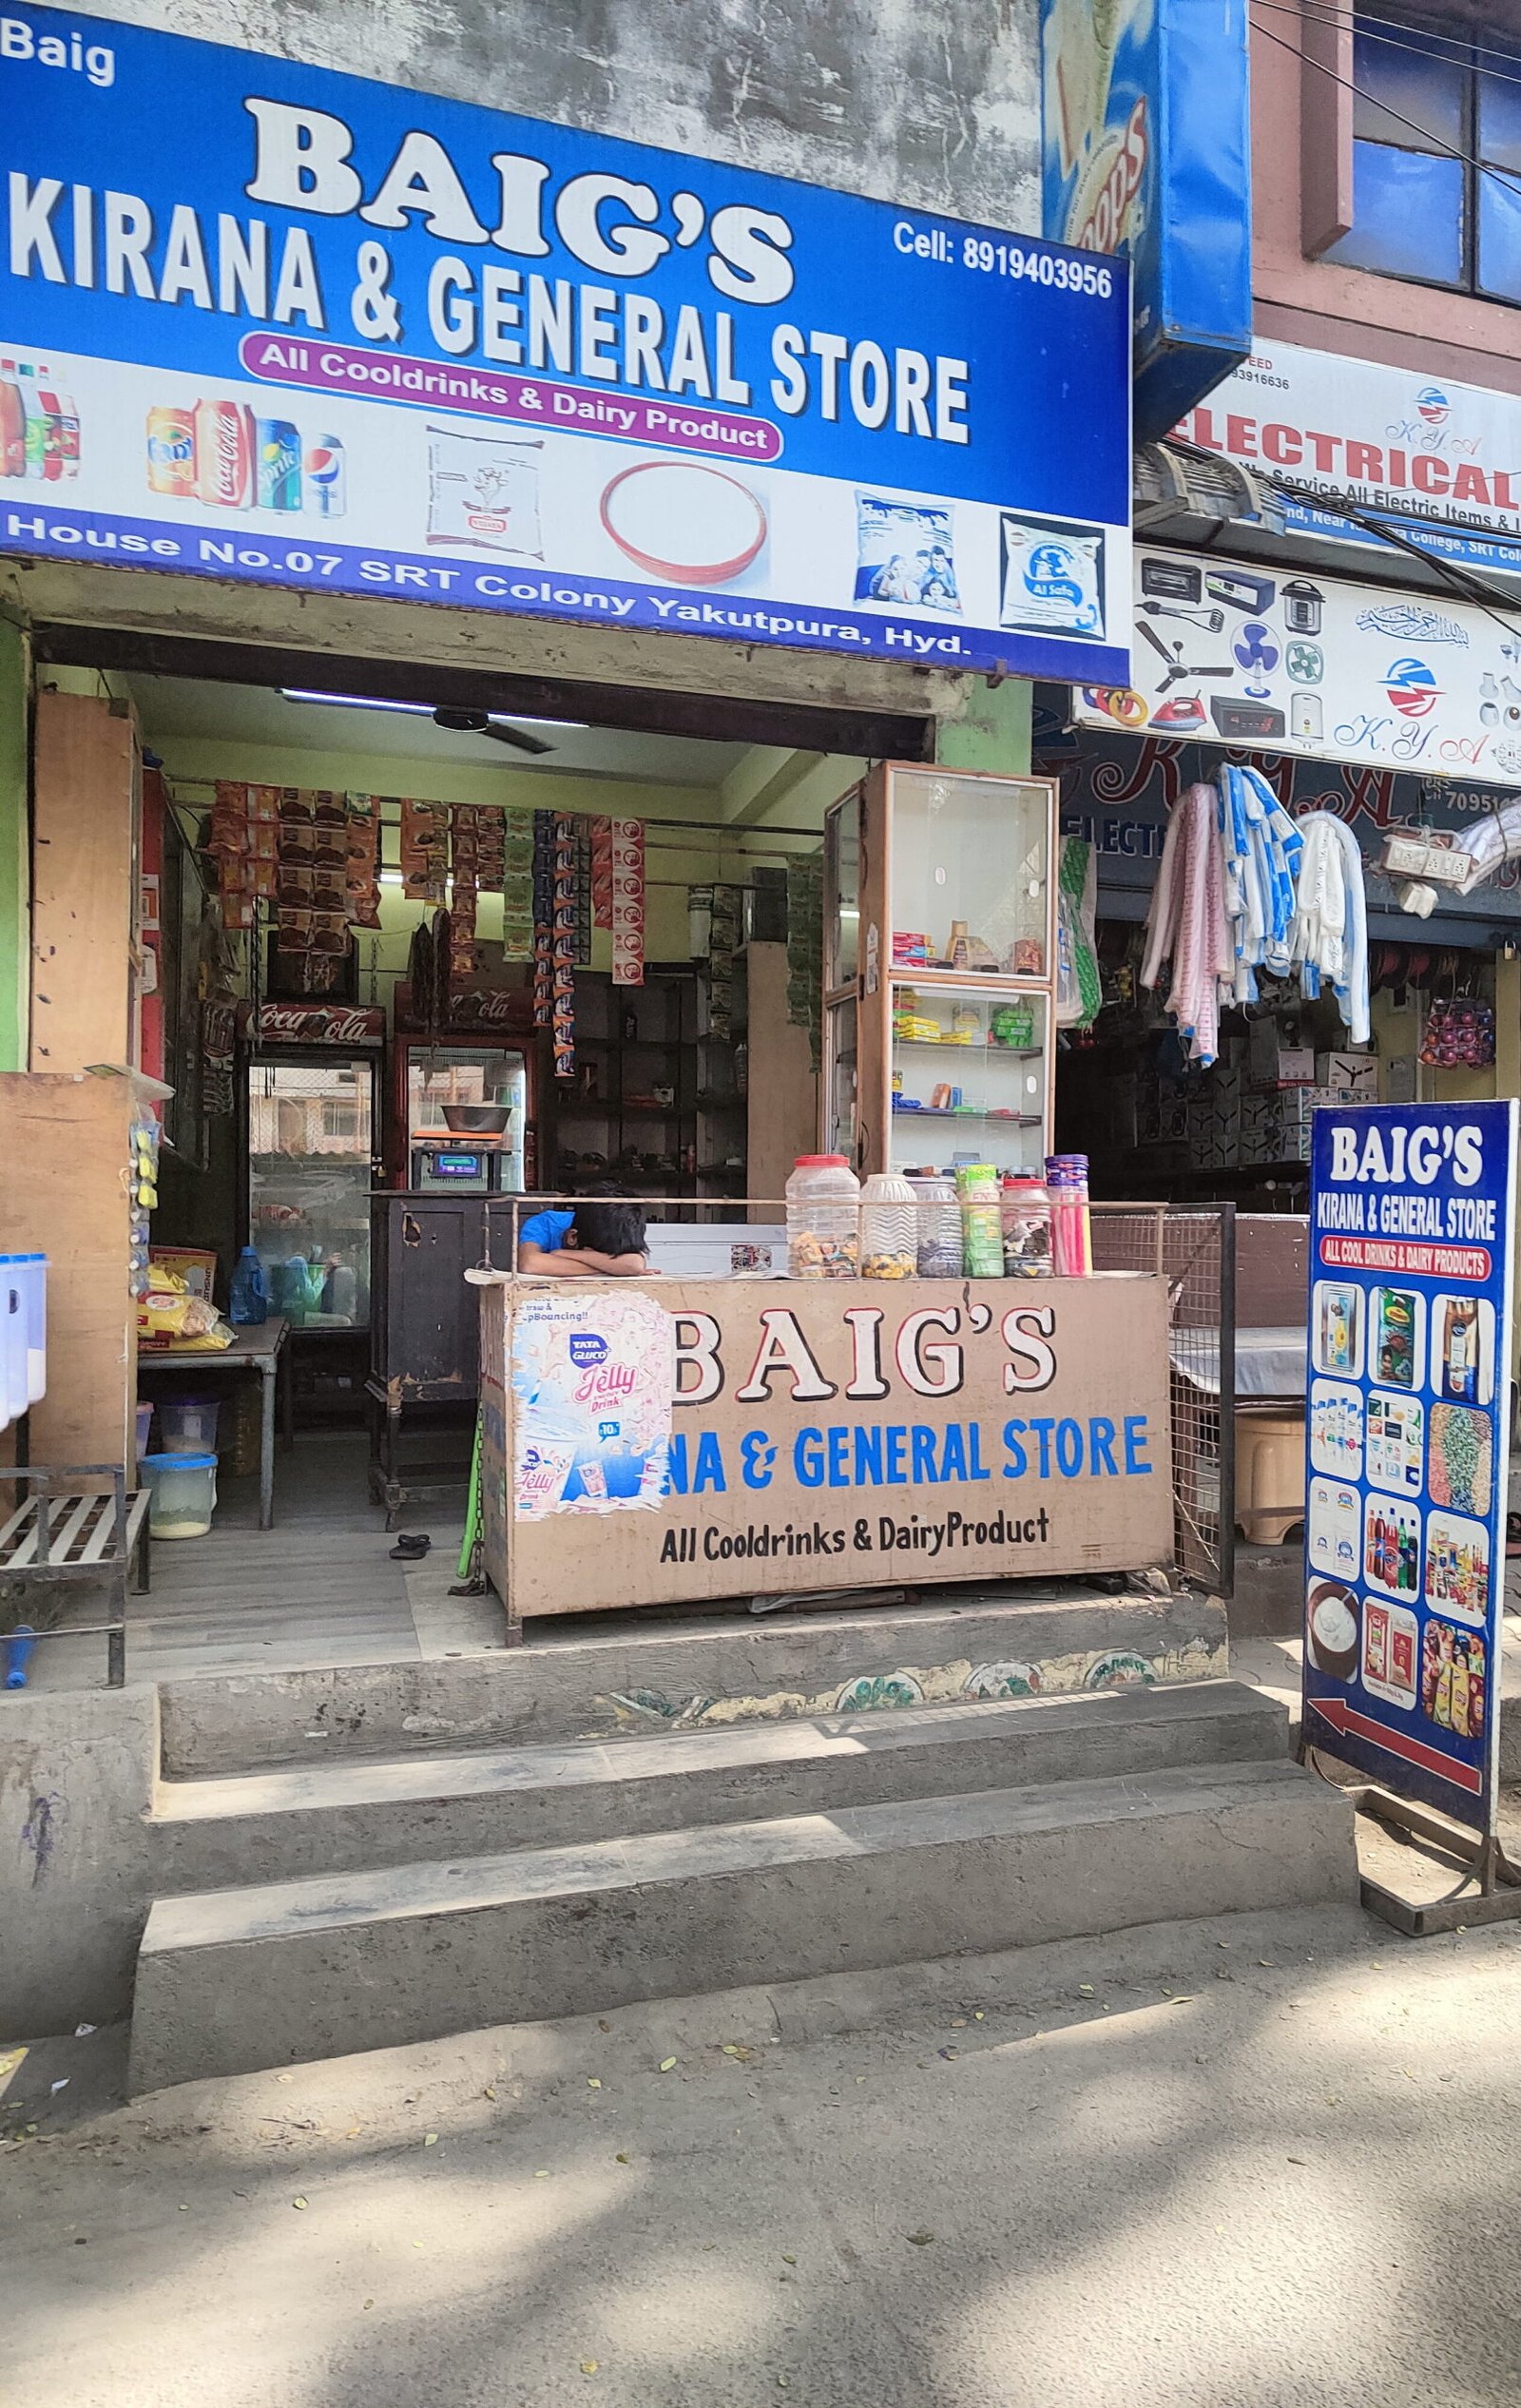 Baigs Kirana & General Store